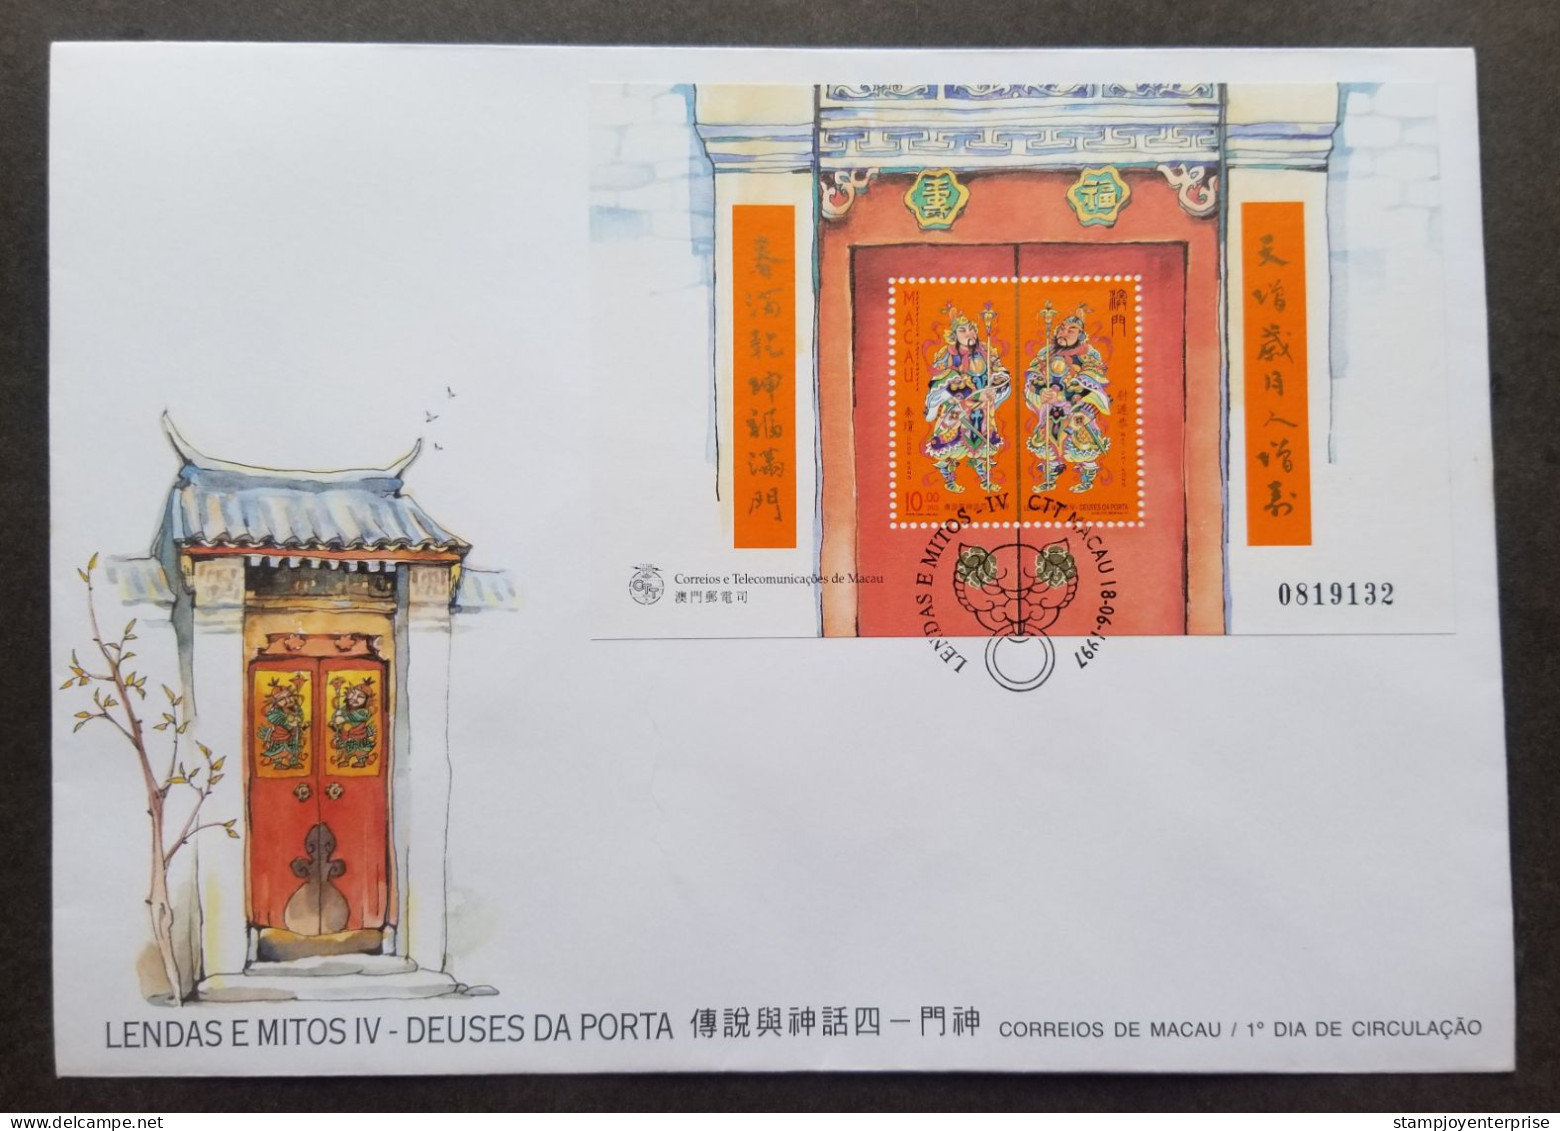 Macau Macao Gateway God Legend 1997 Religious Culture Buddha (FDC) *see Scan - Storia Postale